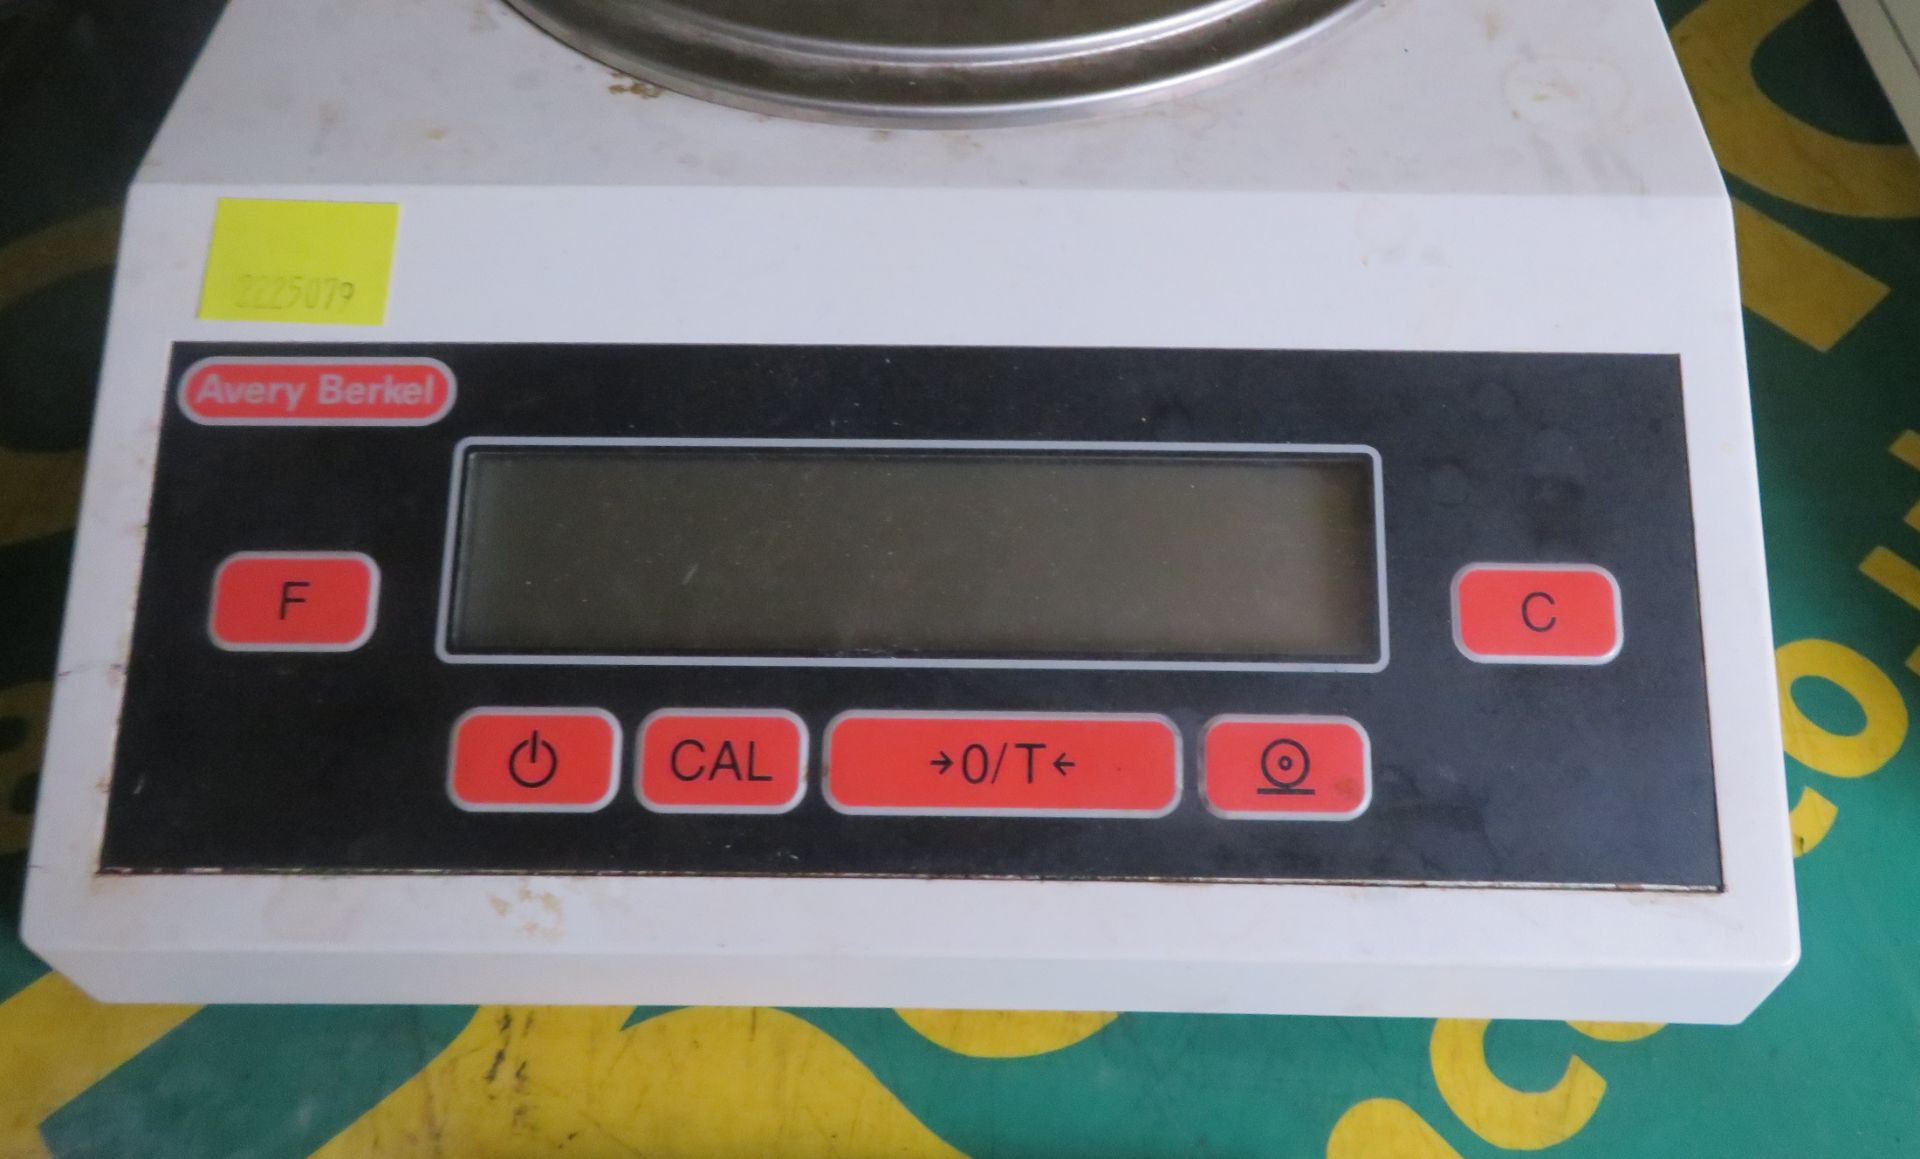 Avery Berkel FA612 Electronic Weighing Scales - Image 2 of 3